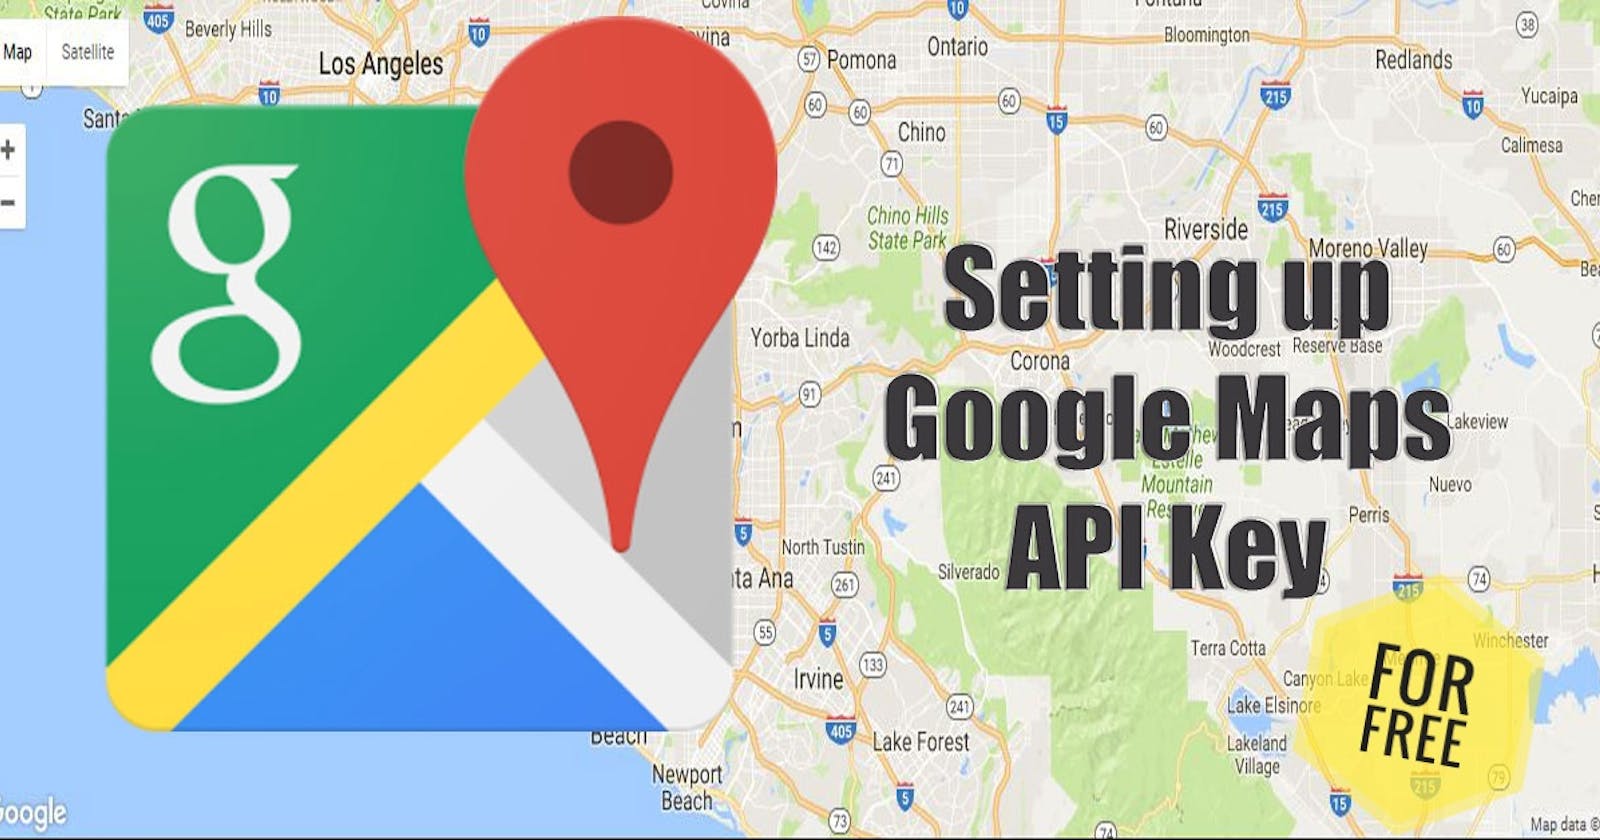 Create Google Map API KEY for Free